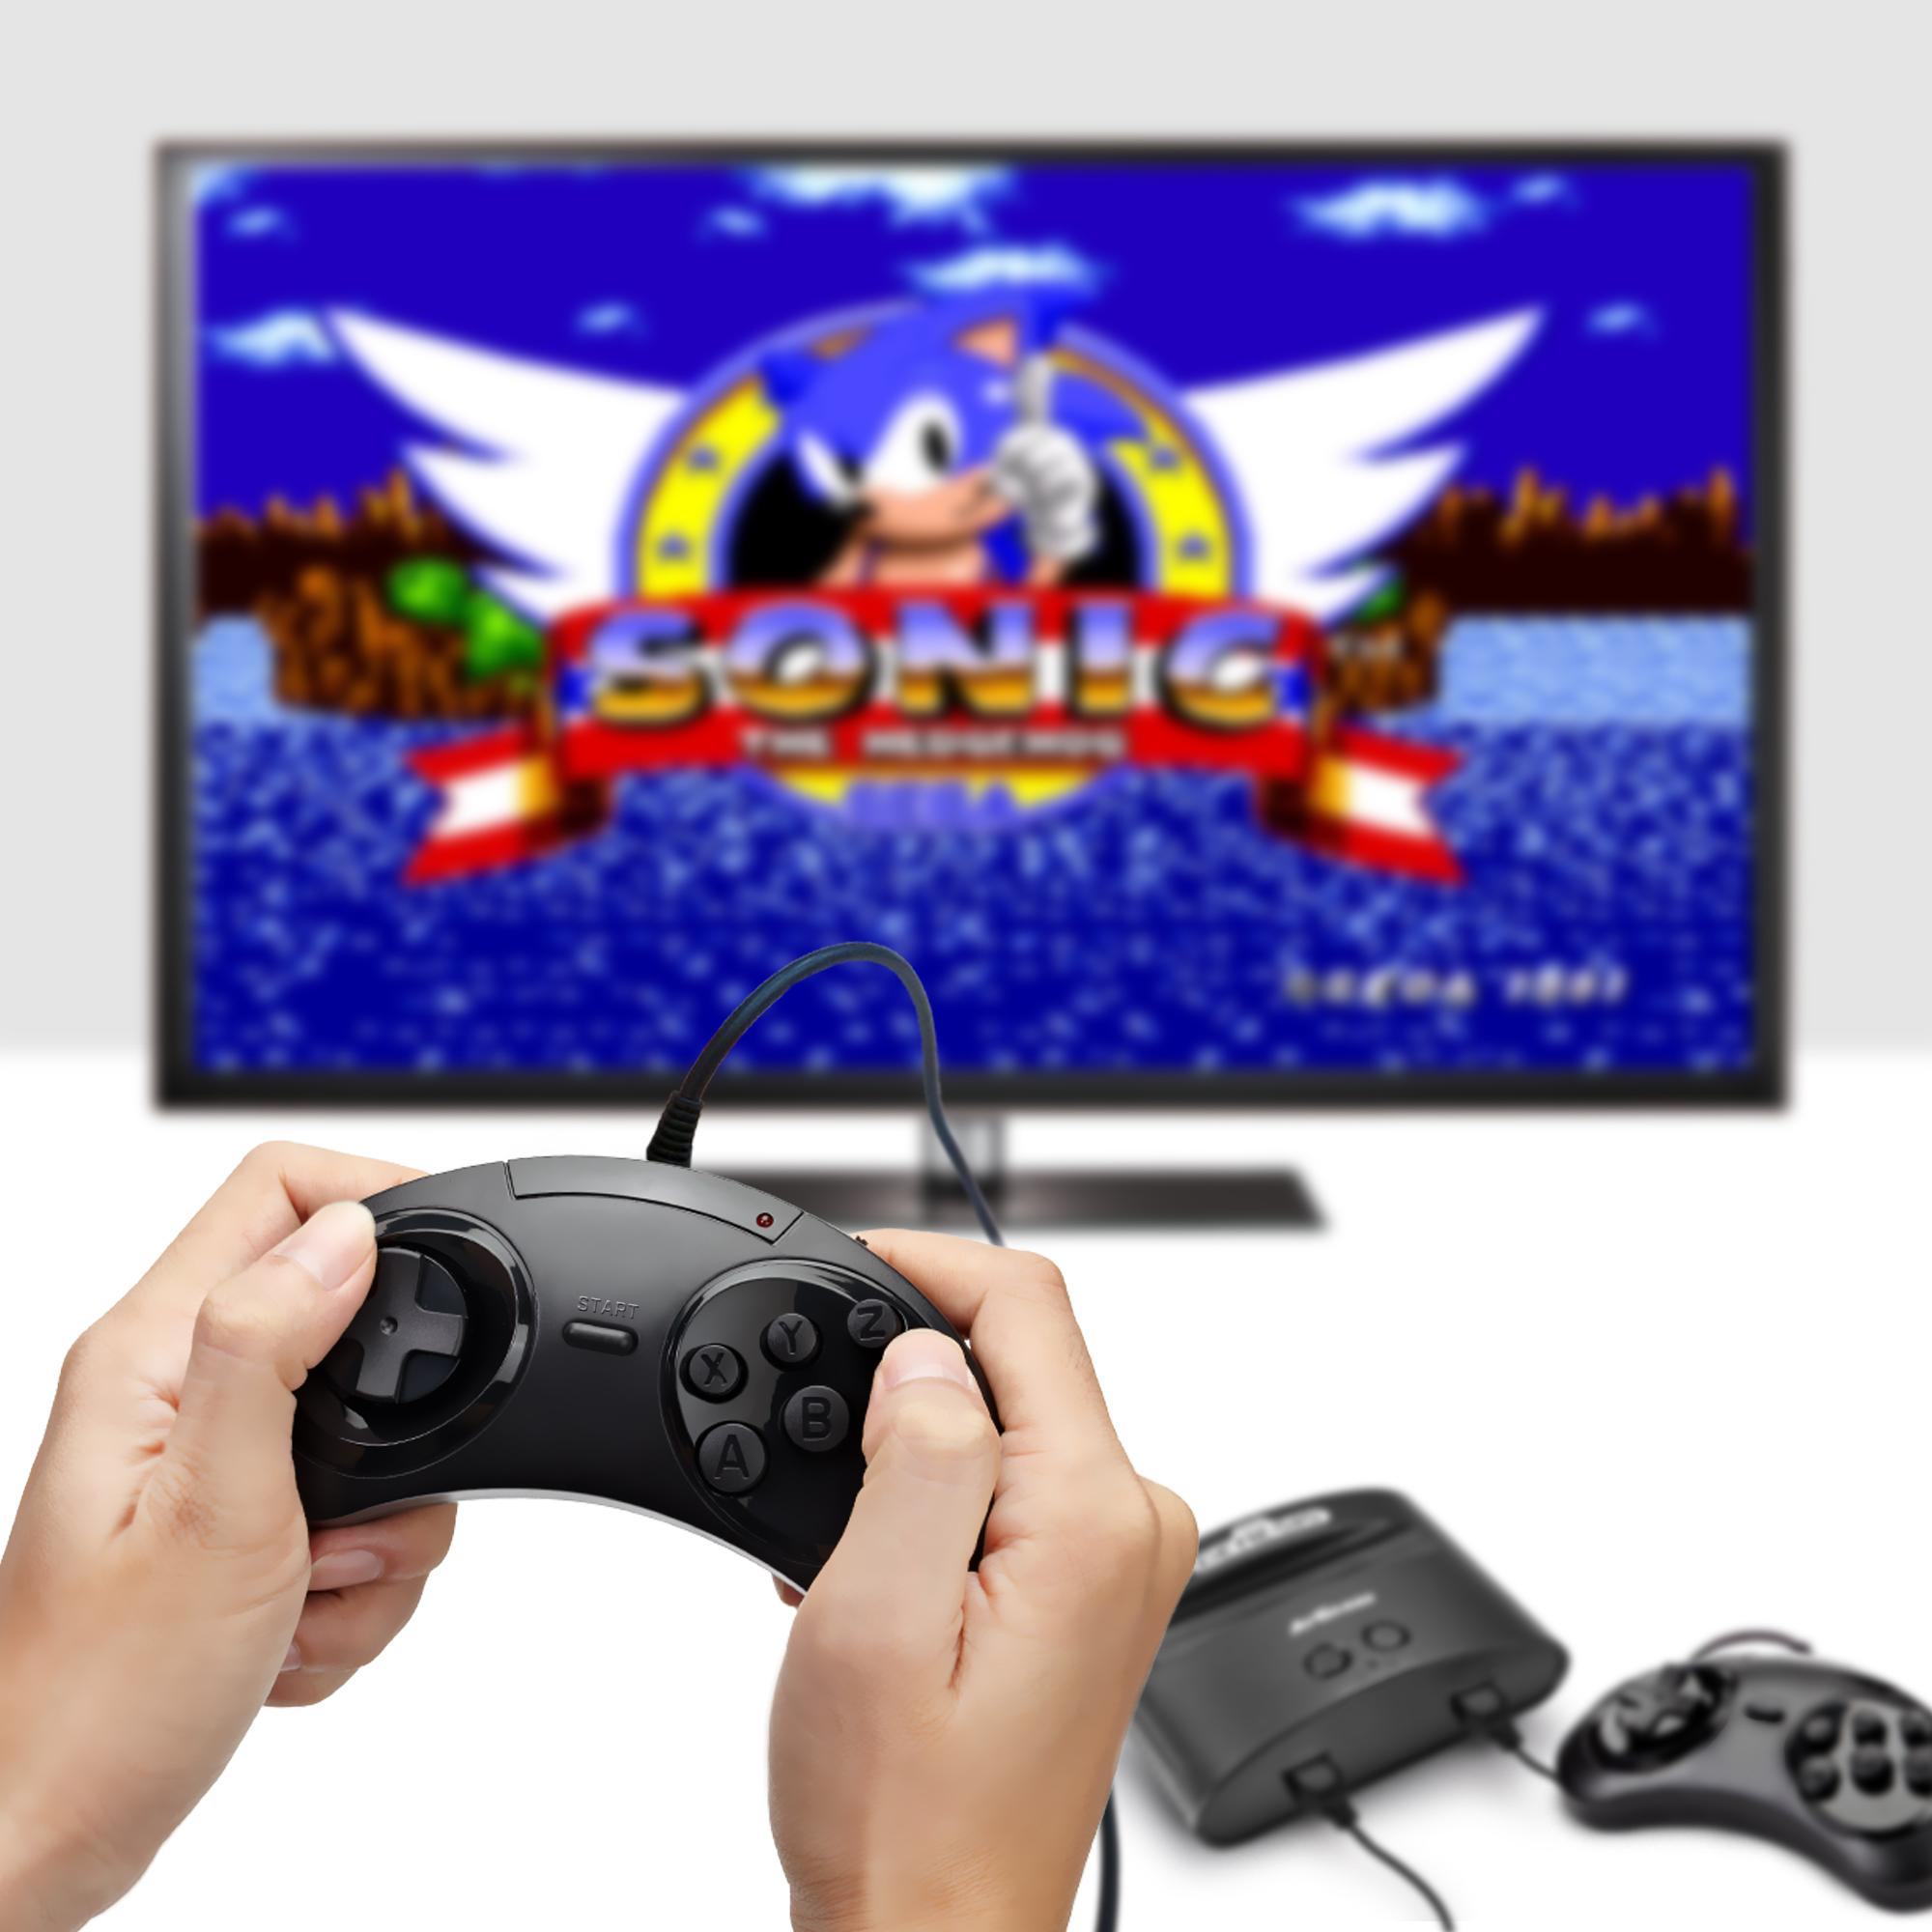 Sega Genesis Classic Game Console with 81 Classic Games Built-in, Black, FB8280C, - image 2 of 3